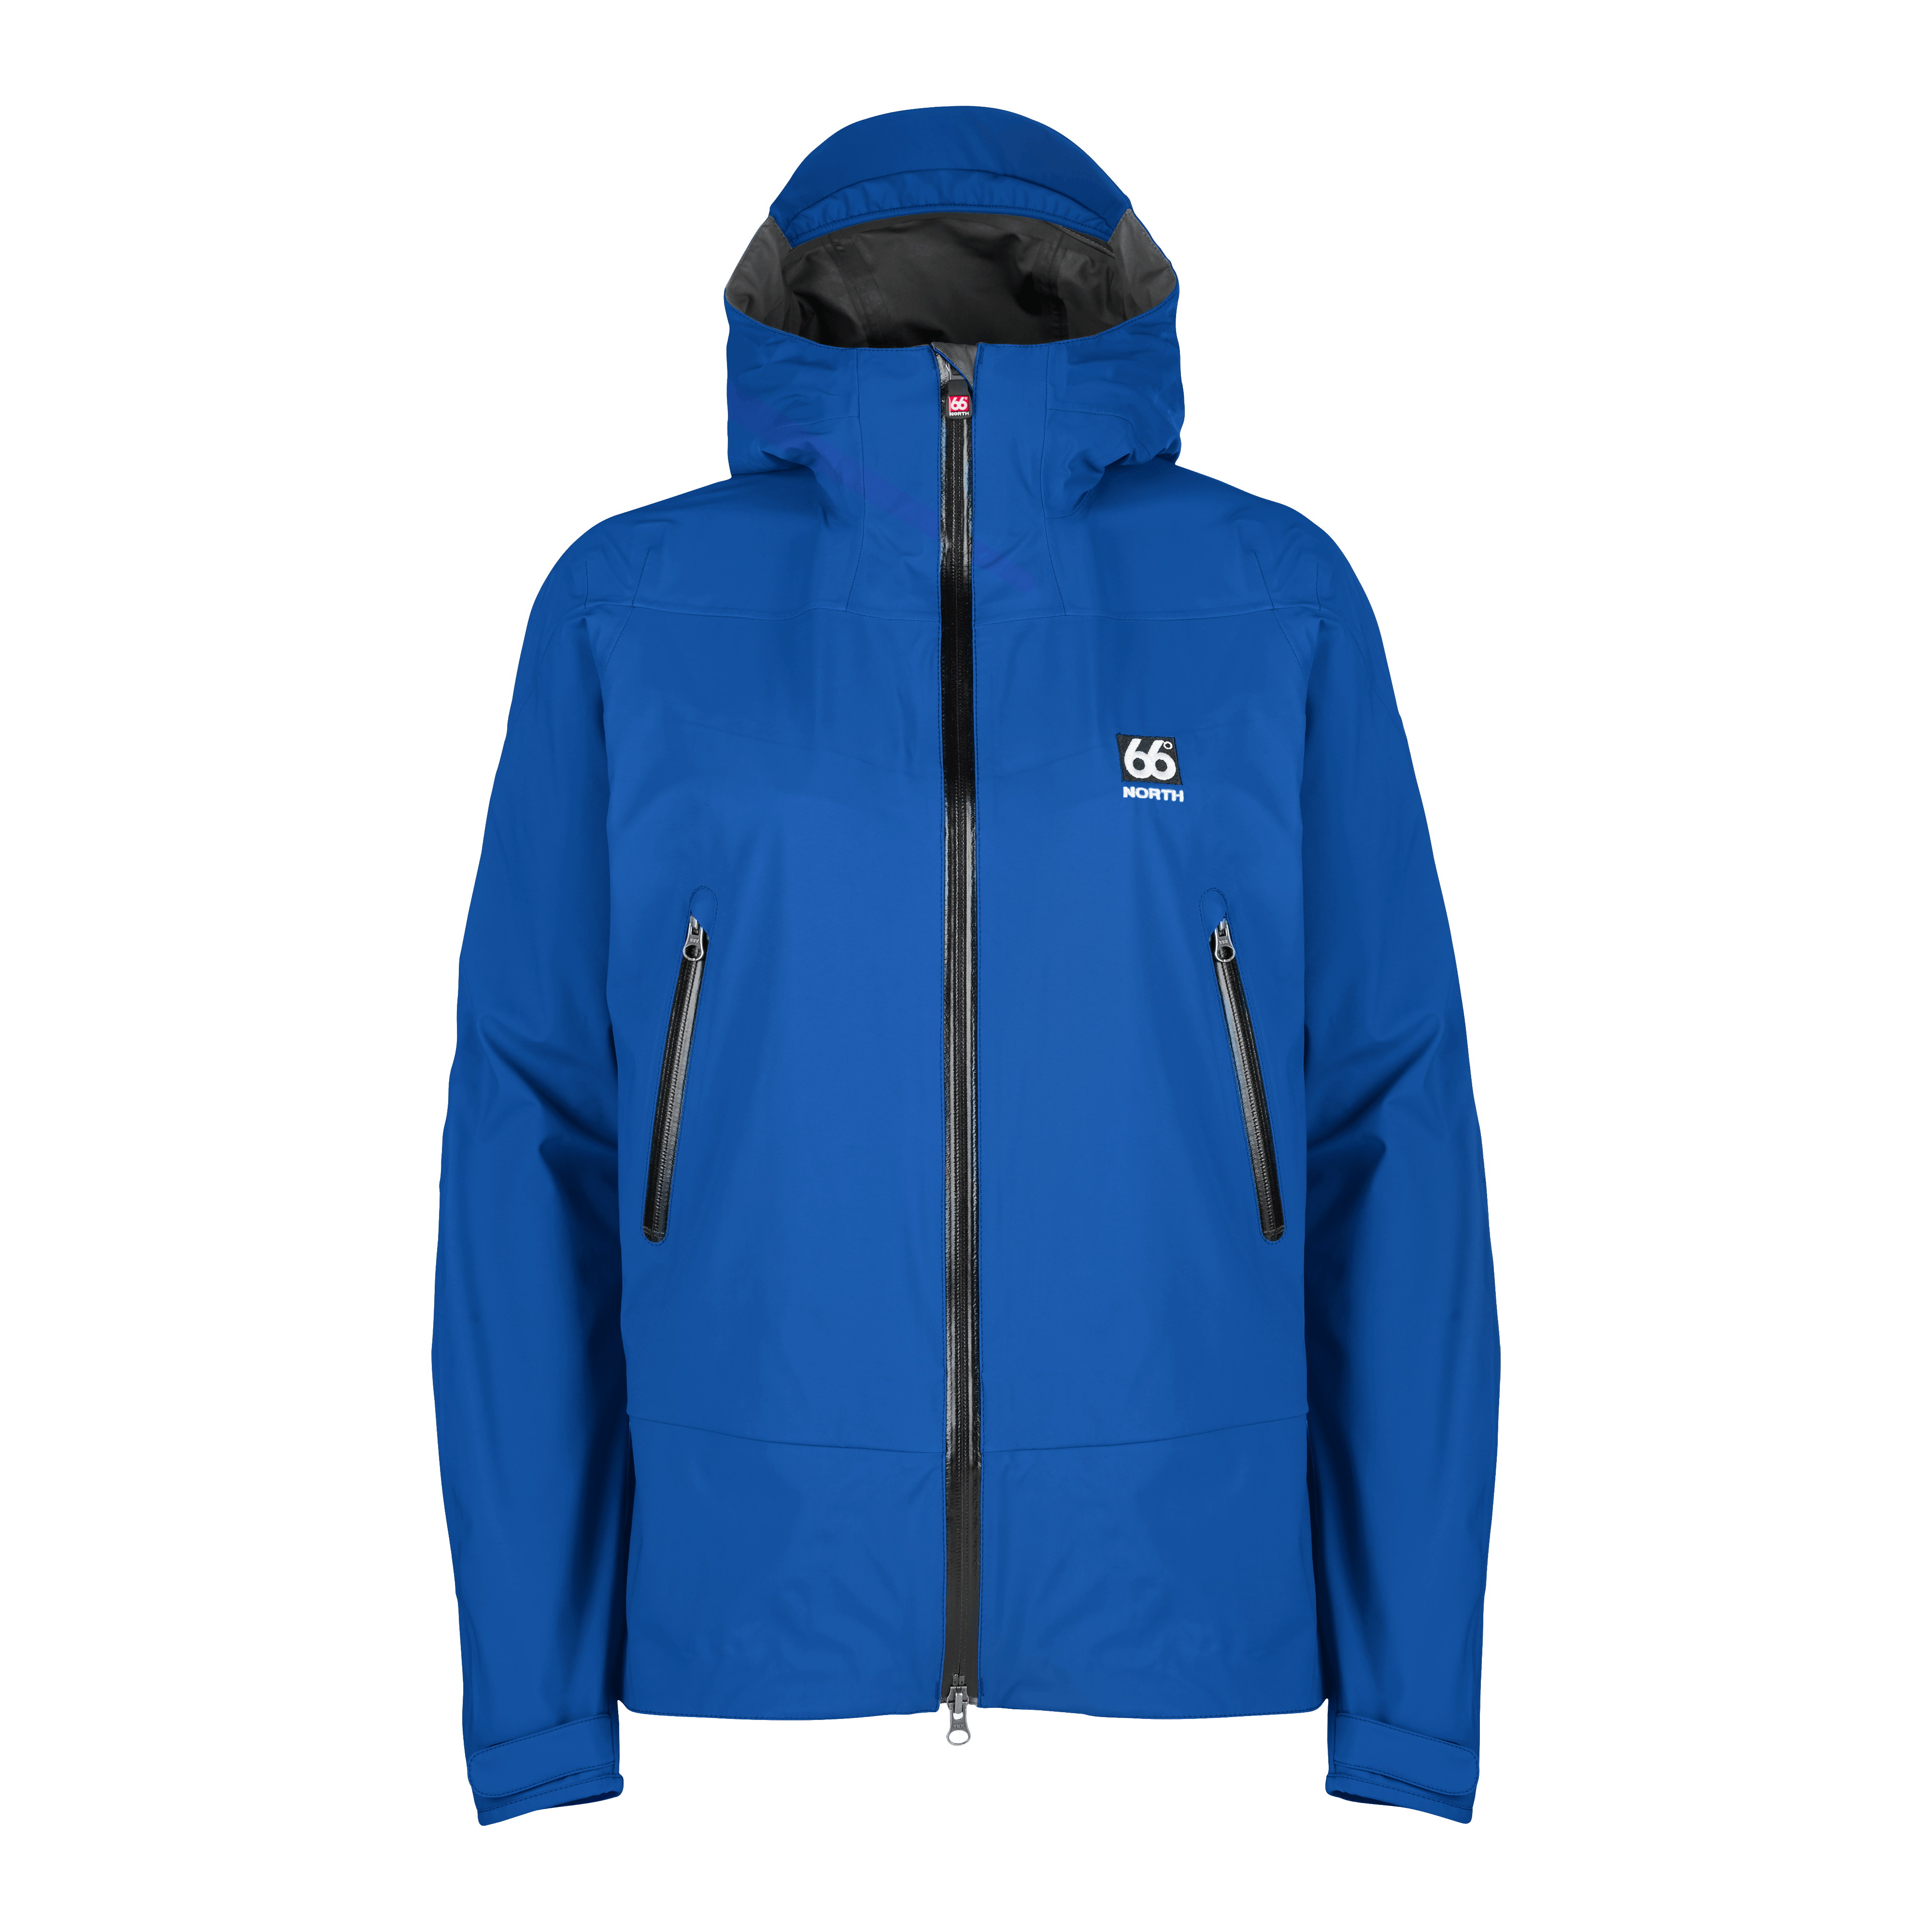 66 North Women's Snæfell Jackets & Coats - Classic Blue - Xl